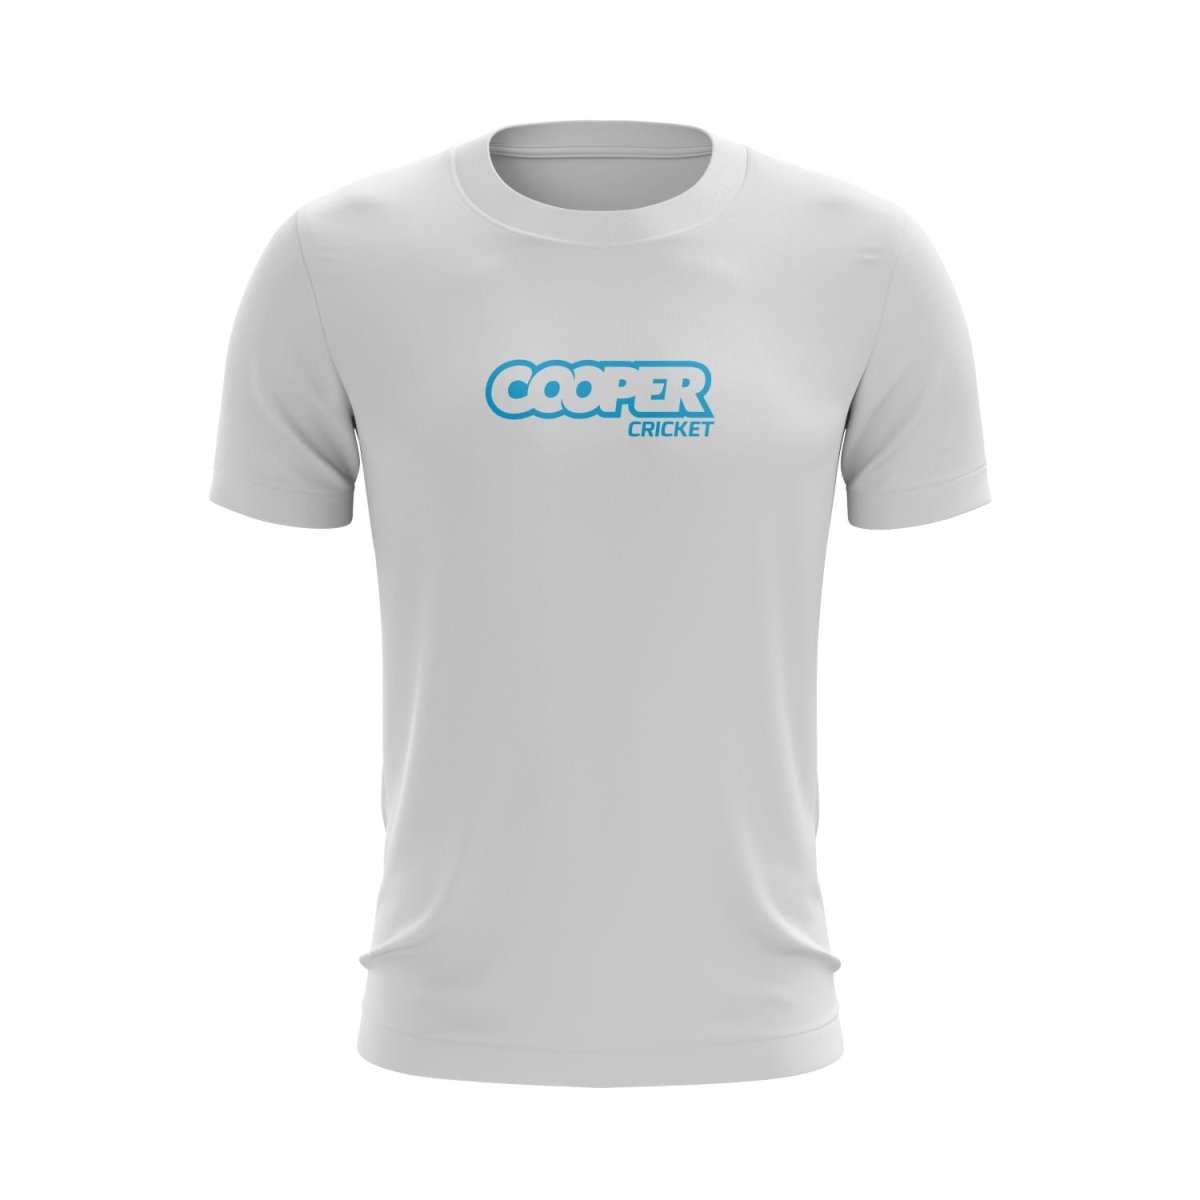 COOPER CRICKET T-SHIRT - Cooper Cricket